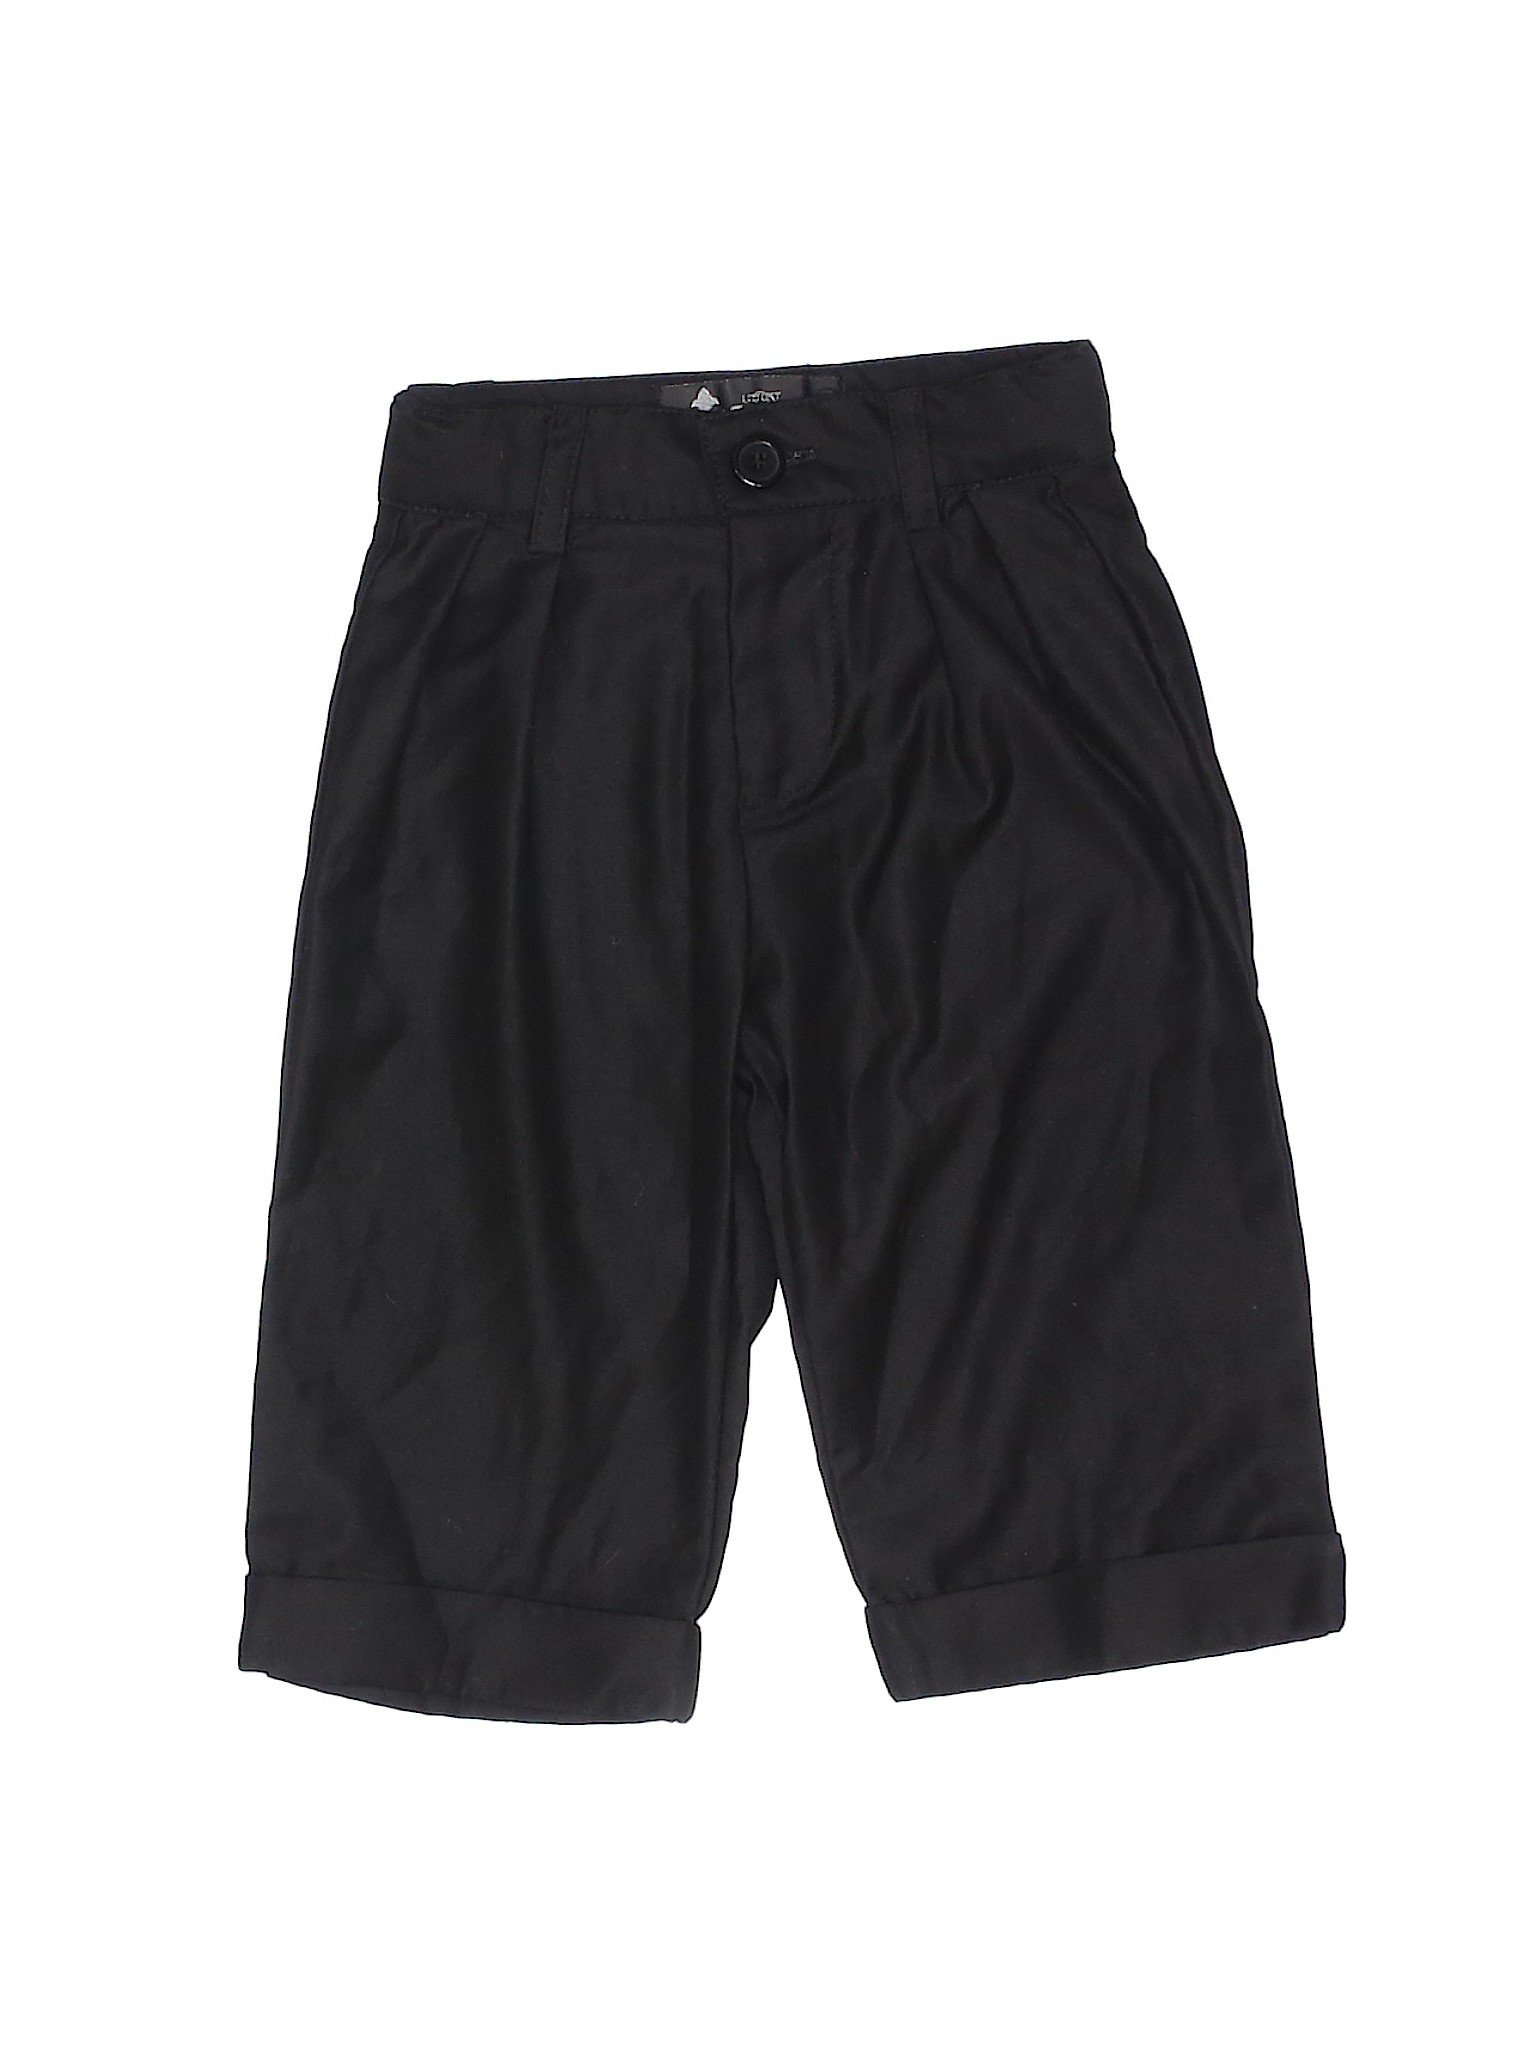 Assorted Brands Boys Black Dress Pants 9 Months | eBay